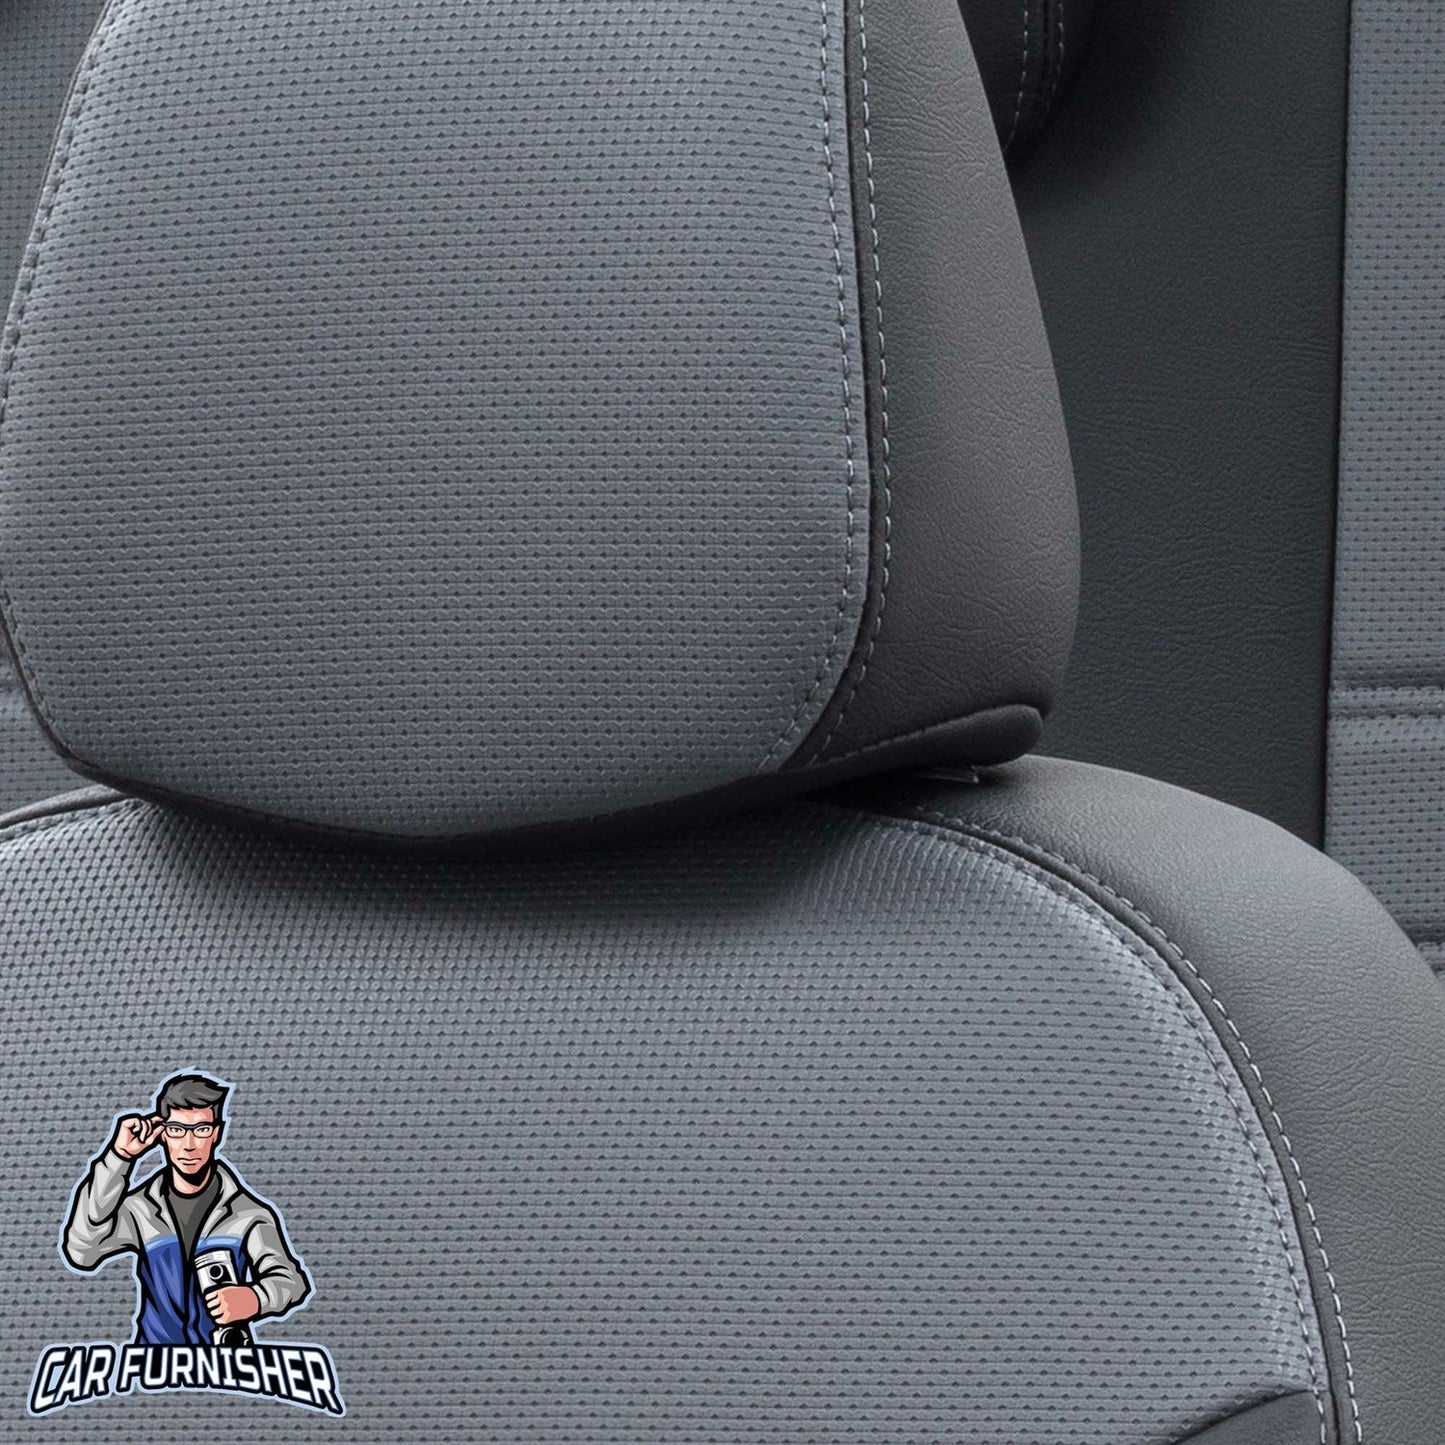 Honda Jazz Seat Covers New York Leather Design Smoked Black Leather